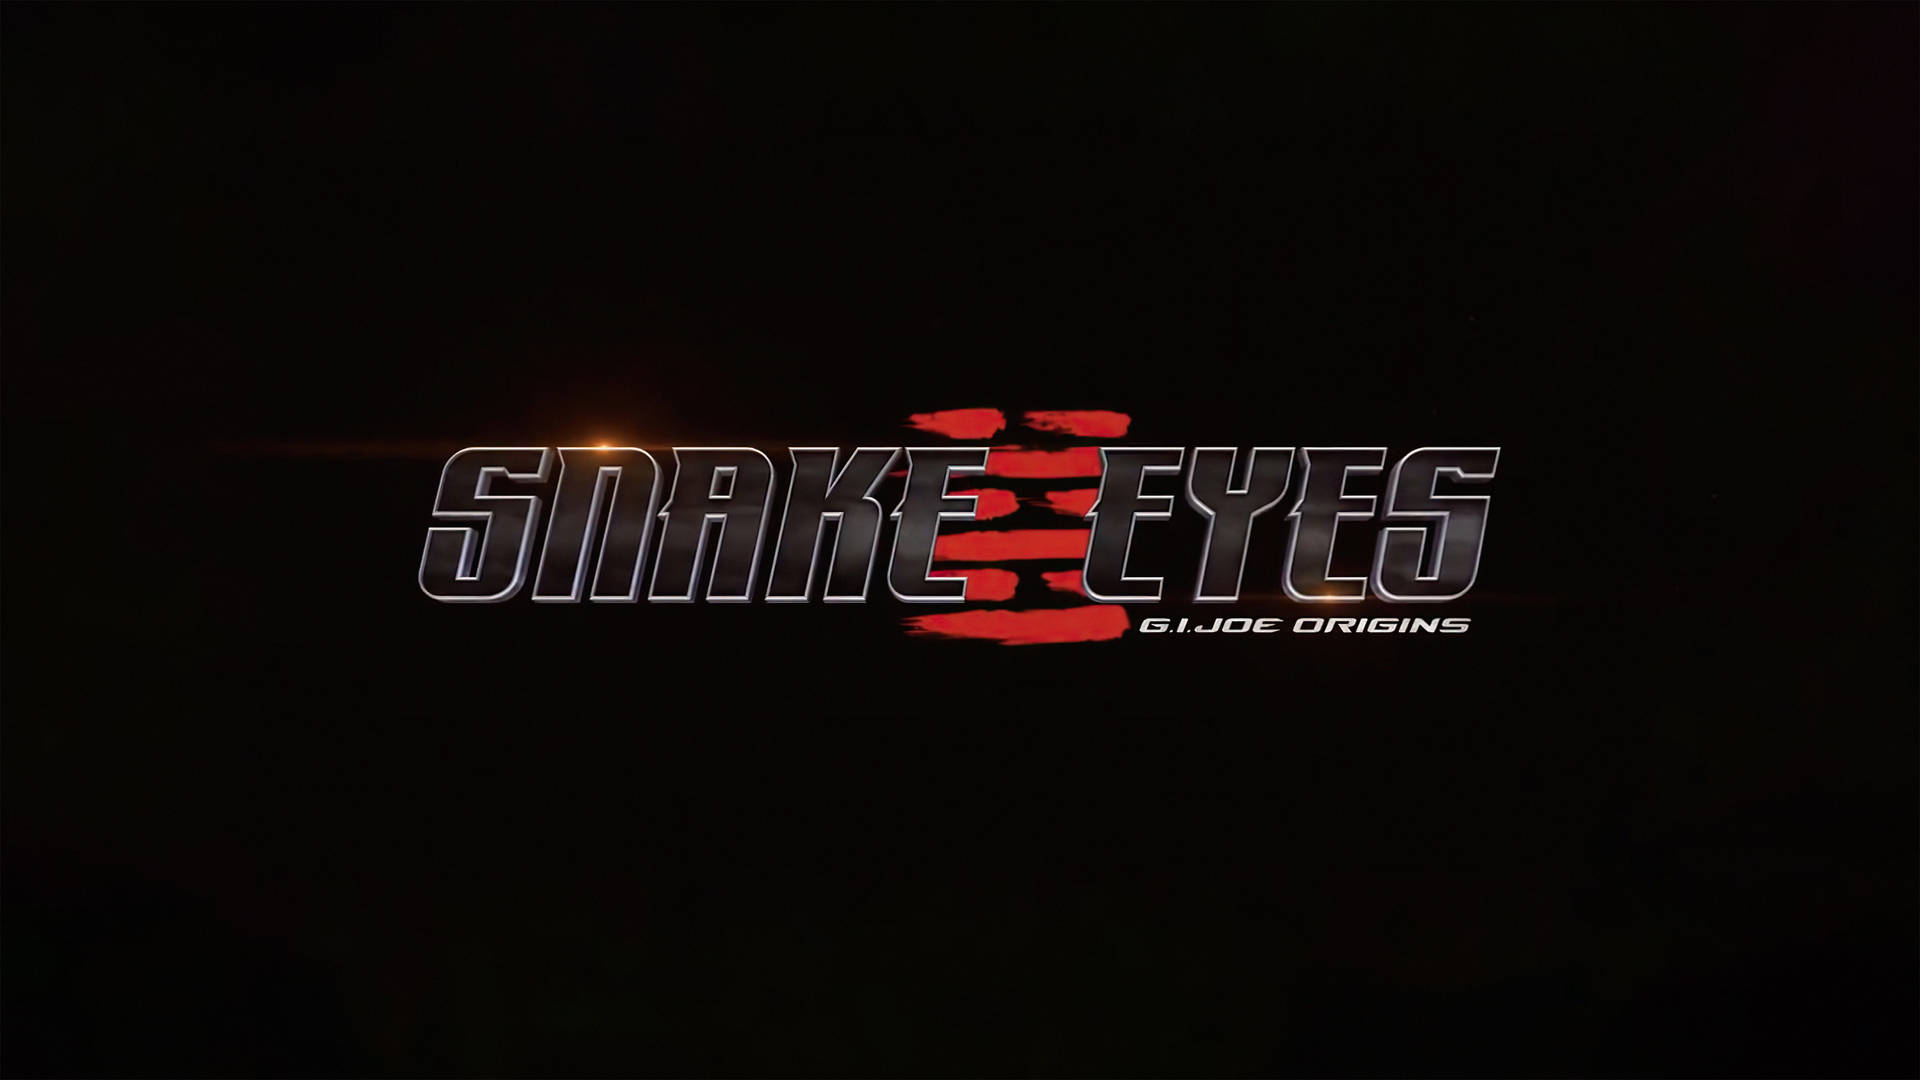 Snake Eyes G.i. Joe Origins Poster Background